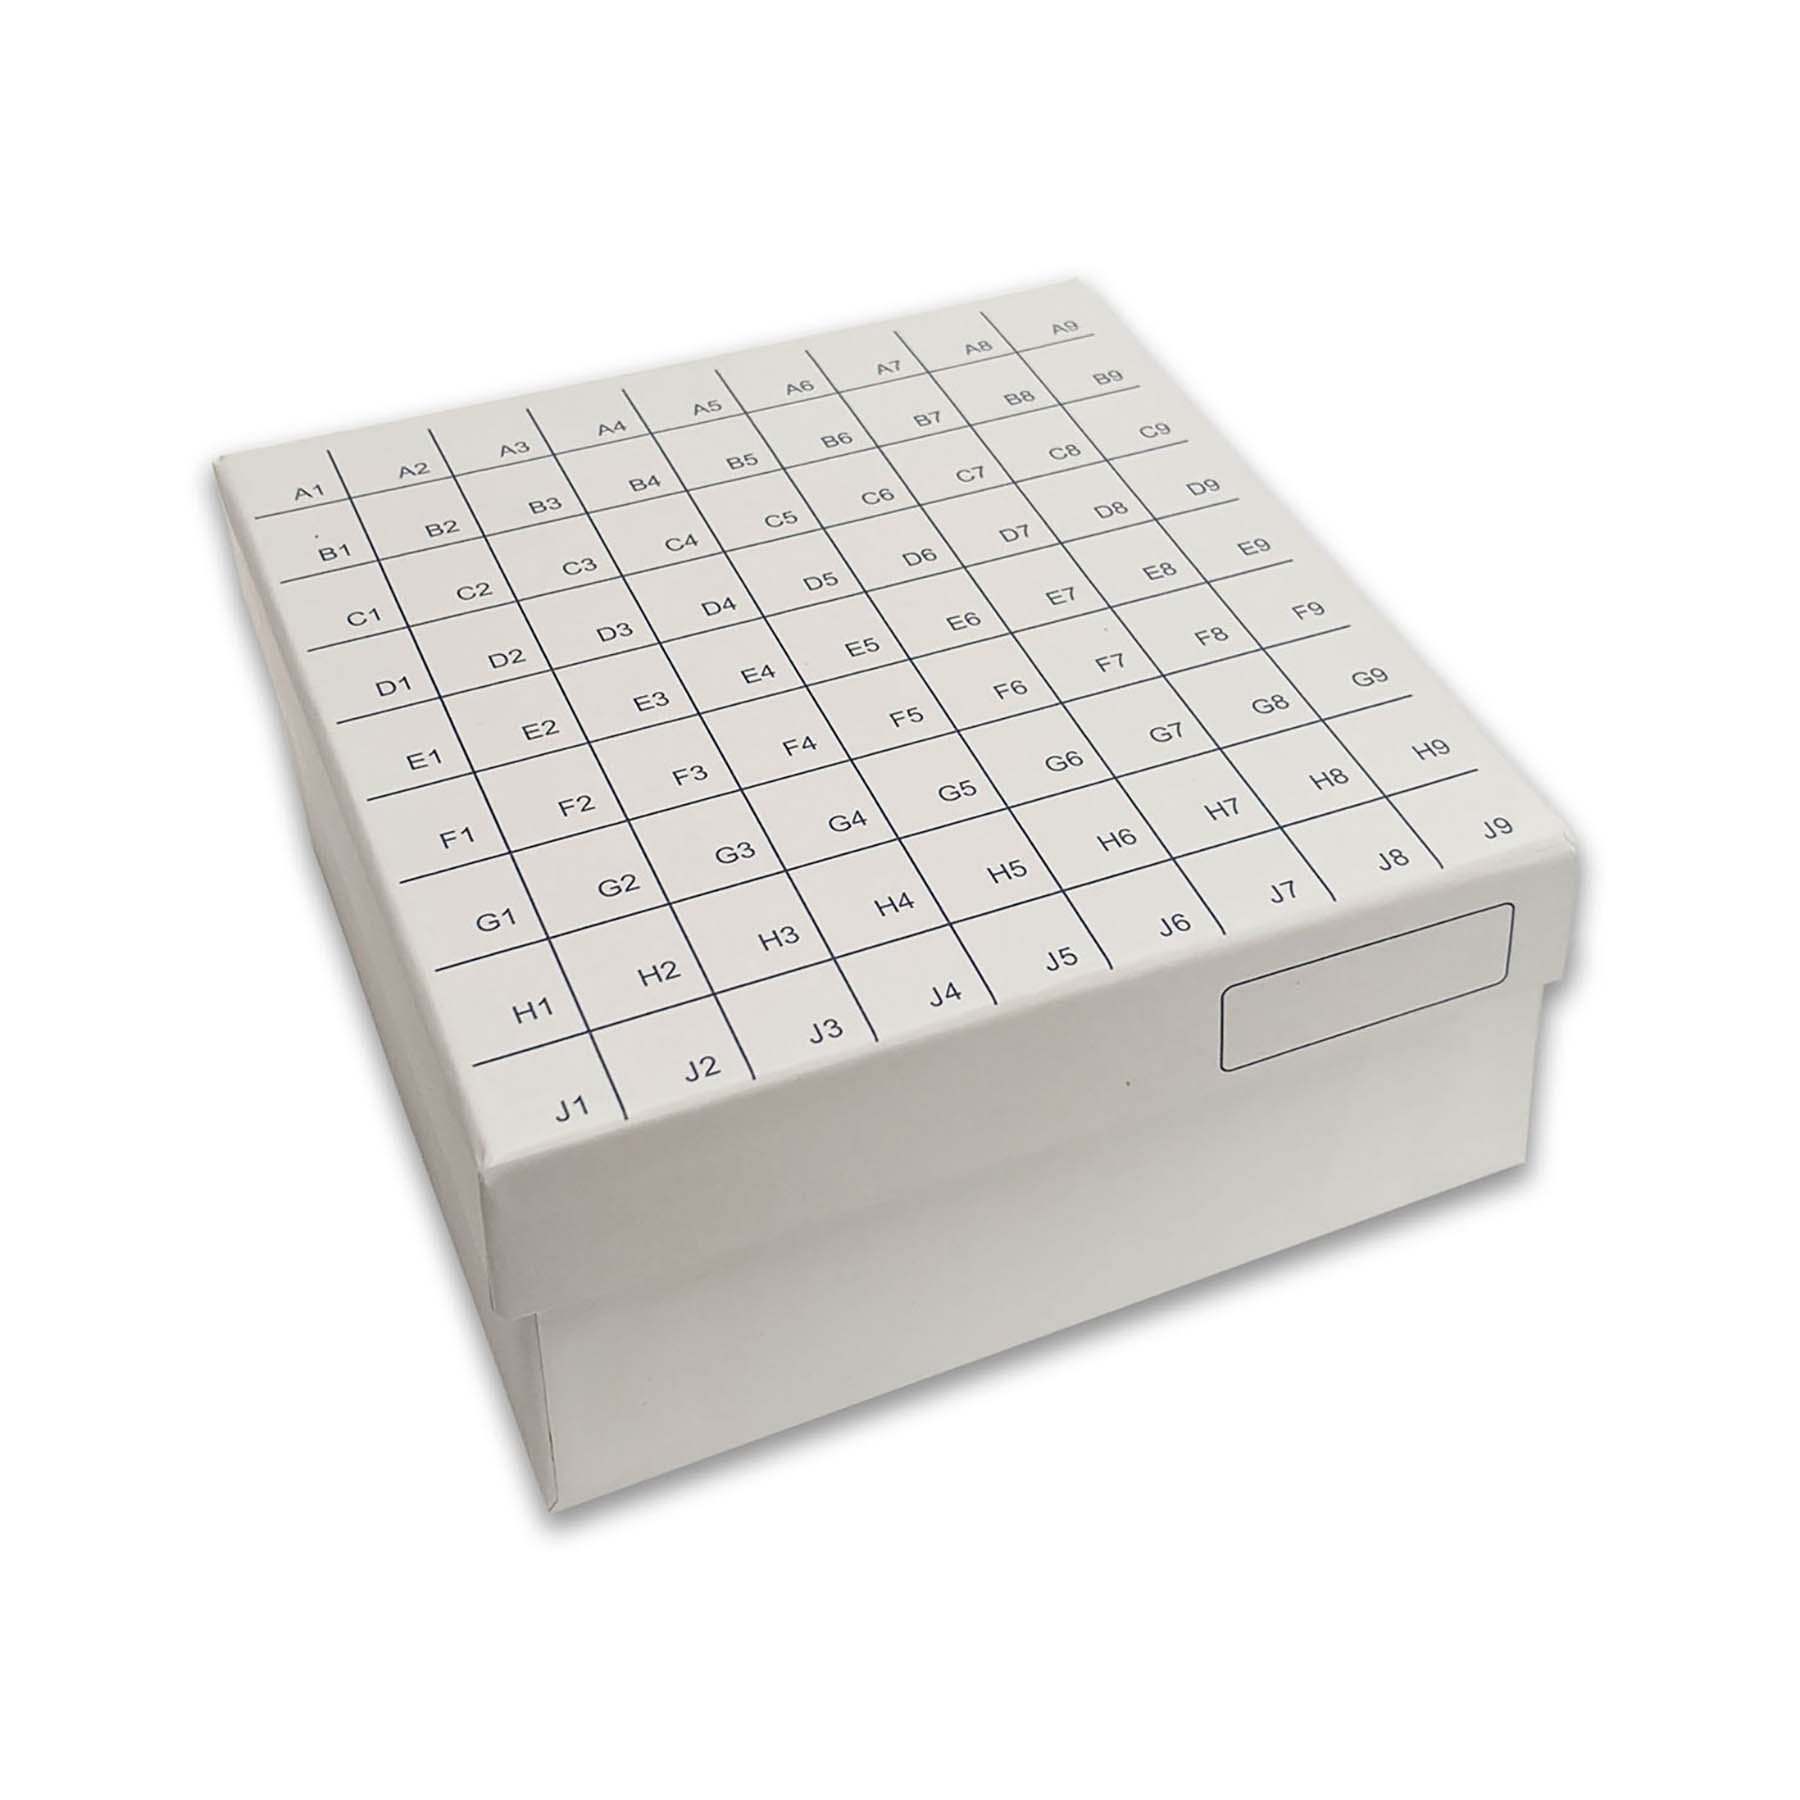 81-Place BestBox® Freezer Box, Polypropylene